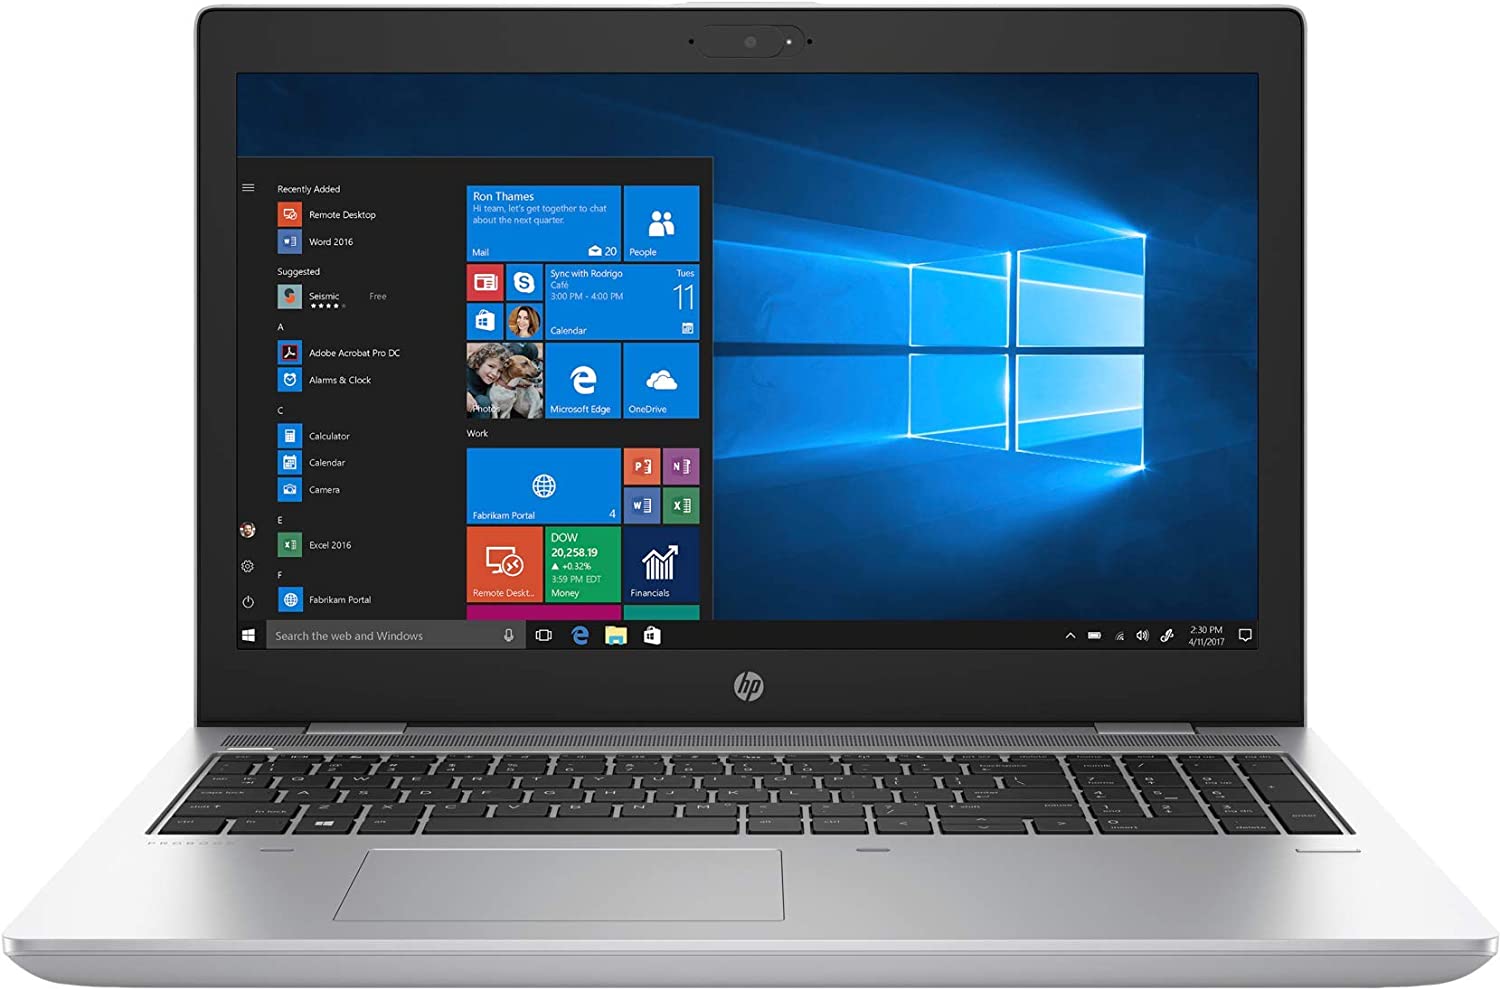 HP ProBook 650 G4 Full HD Laptop, (Intel Core i5-8250U 1.6GHz Processor, 8 GB RAM, 500 GB SSD, Windows 10 Pro) (Silver) 15.6 Inch0